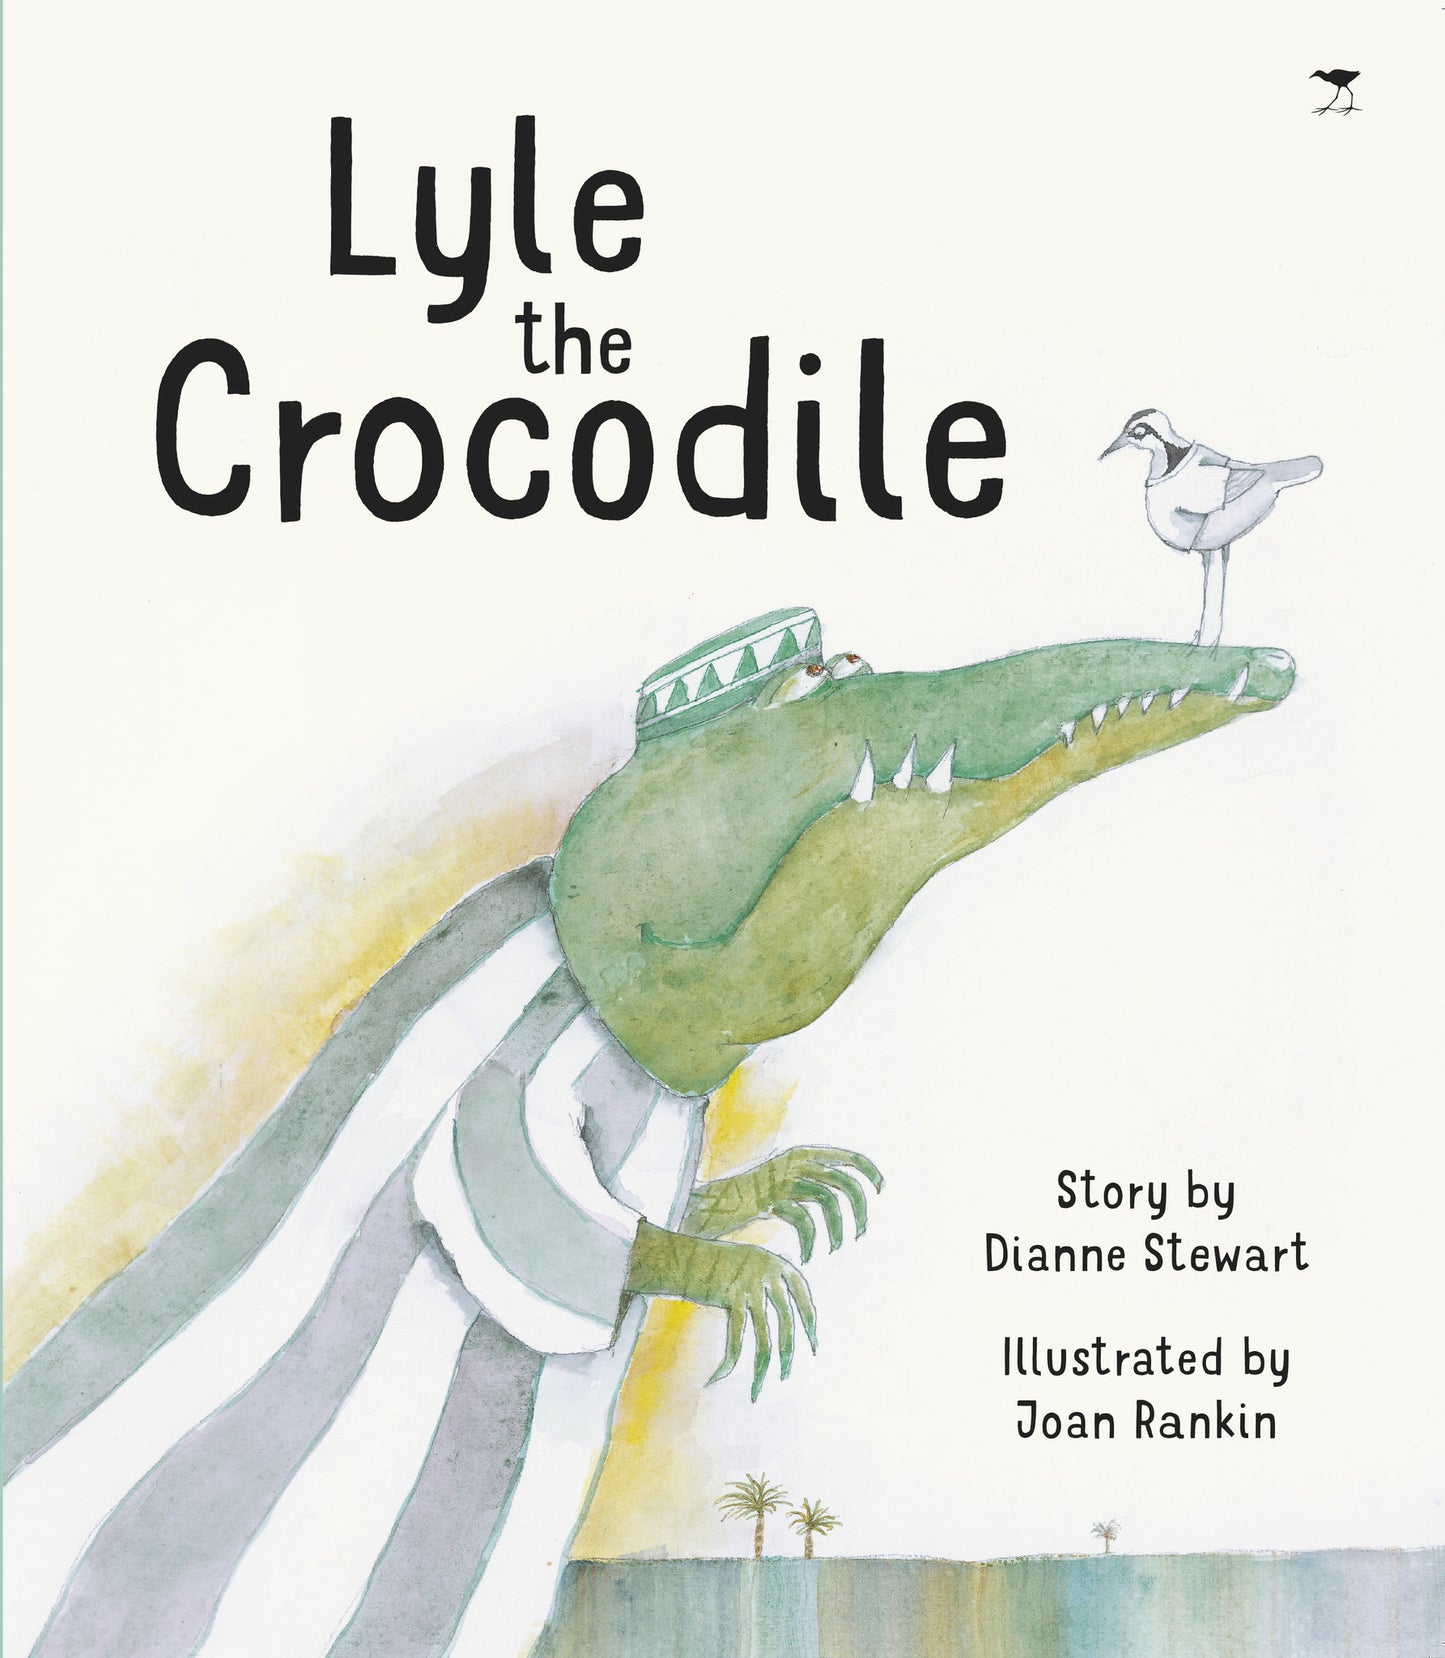 Lyle the crocodile